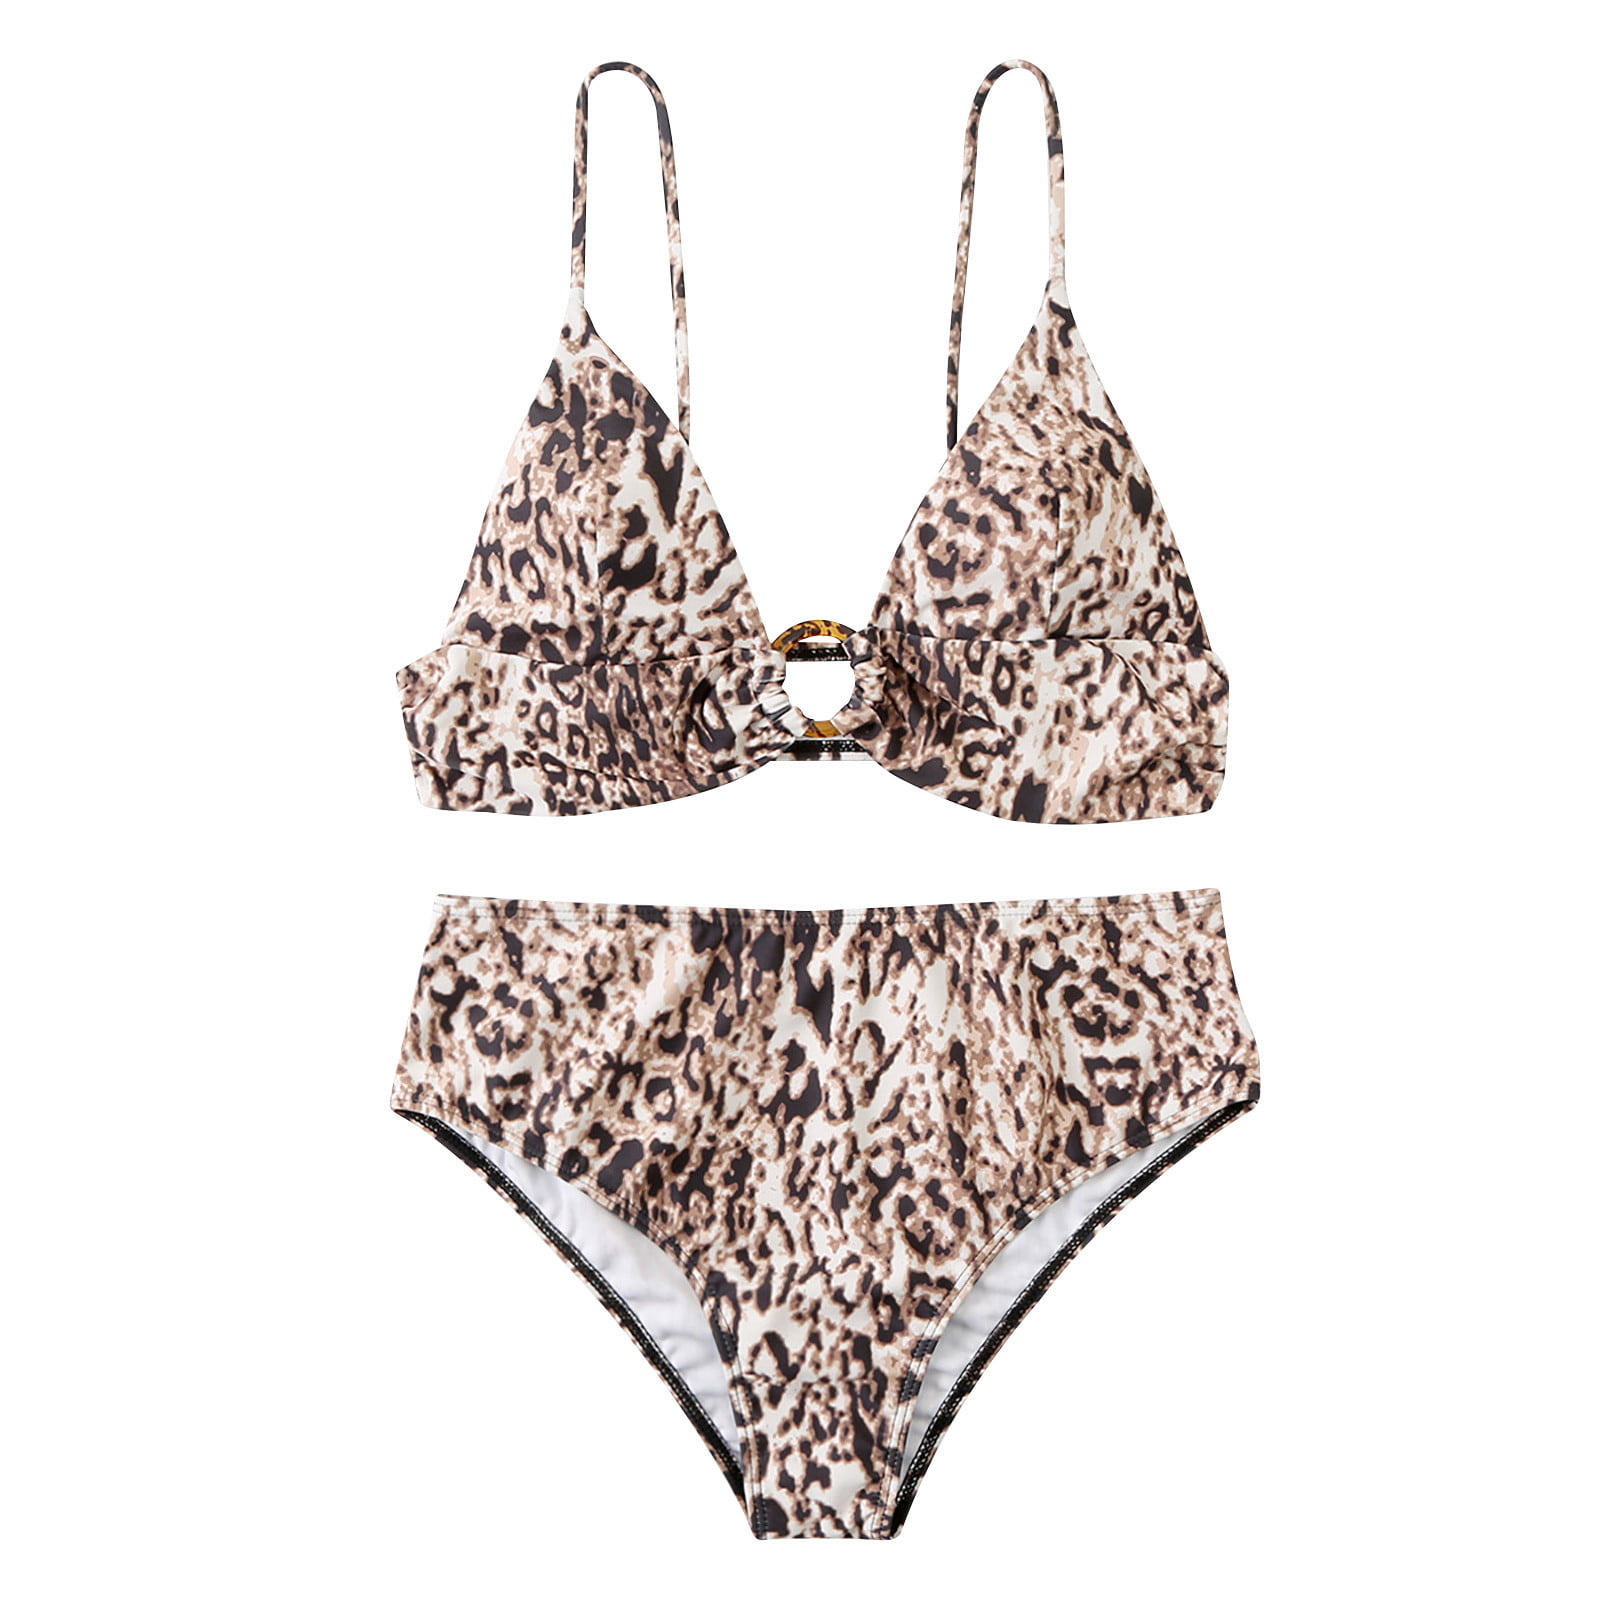 Miximx Women Sexy Bikini Set Leopard Print 3 Point Bikini High Cut Spaghetti Straps Swimwear